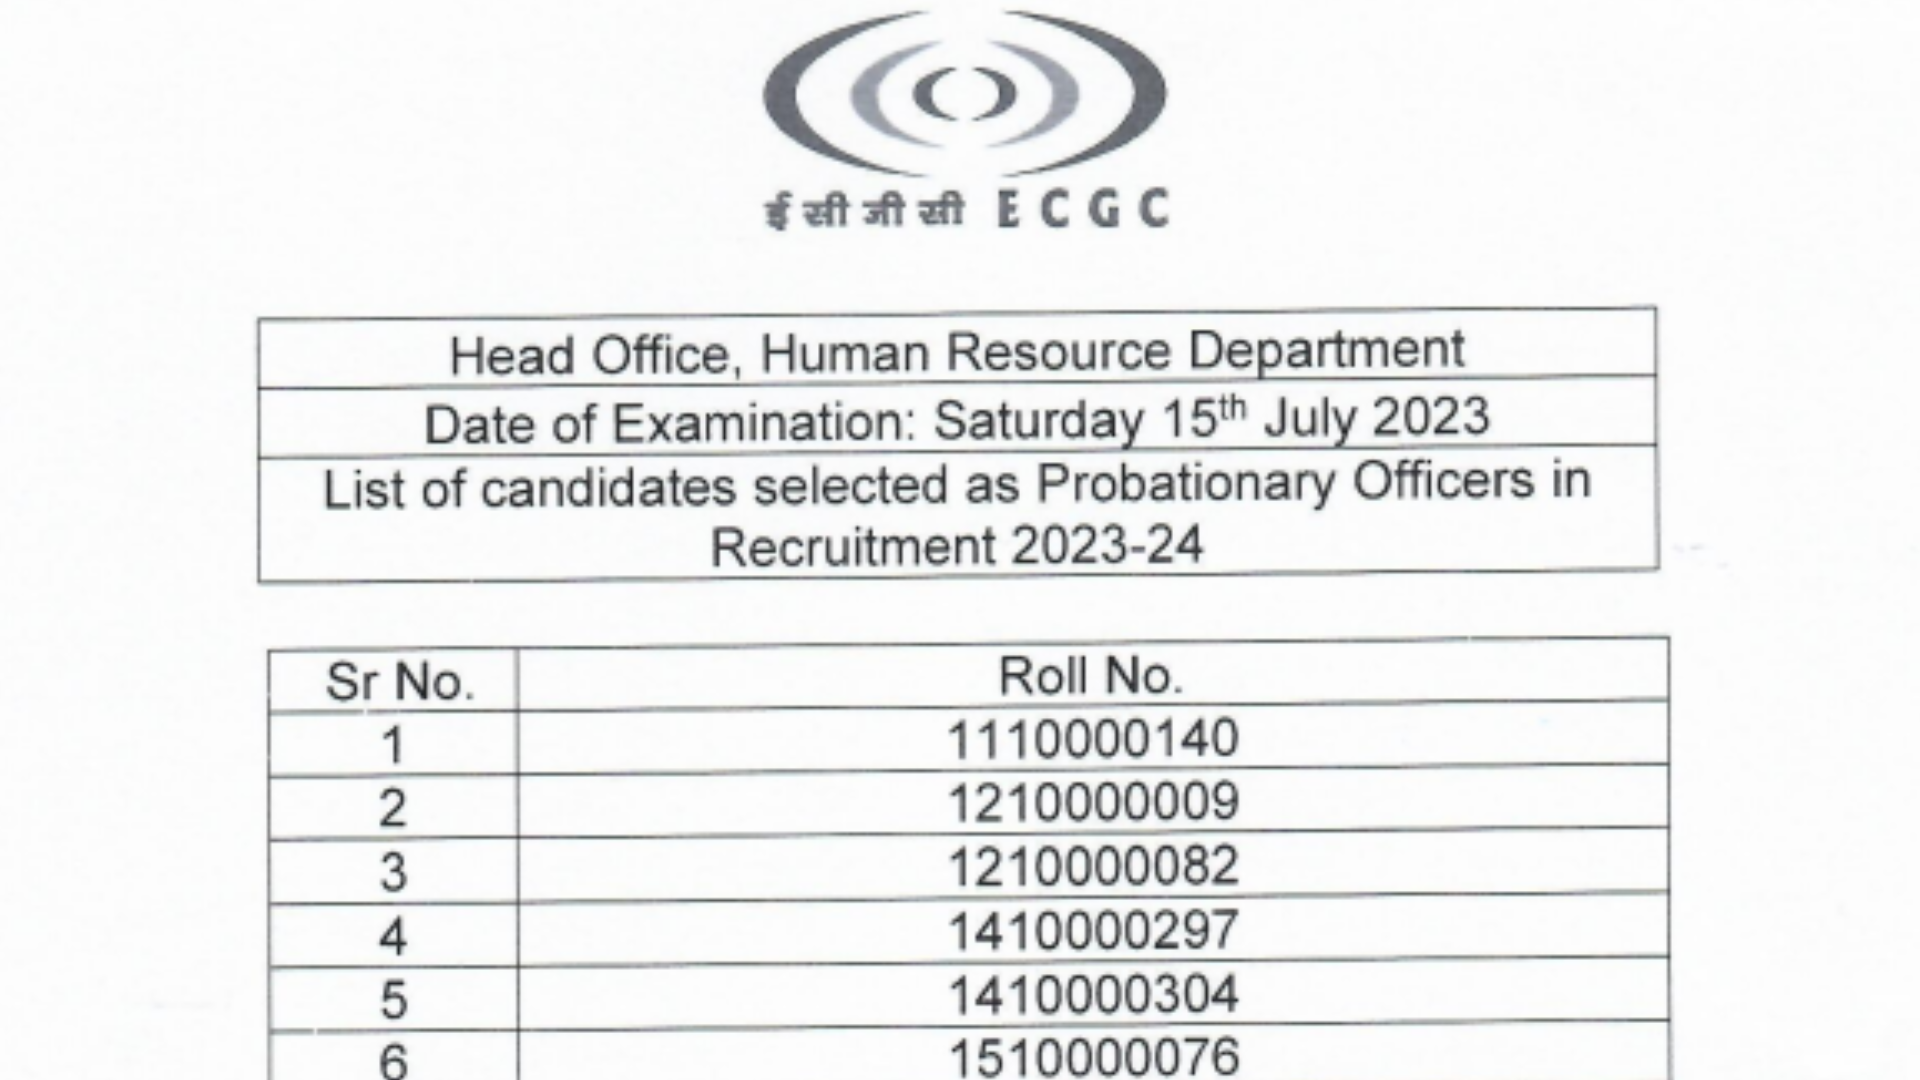 ECGC Ltd Recruitment 2023 Final Result for Probationary Officer PO 17 Post